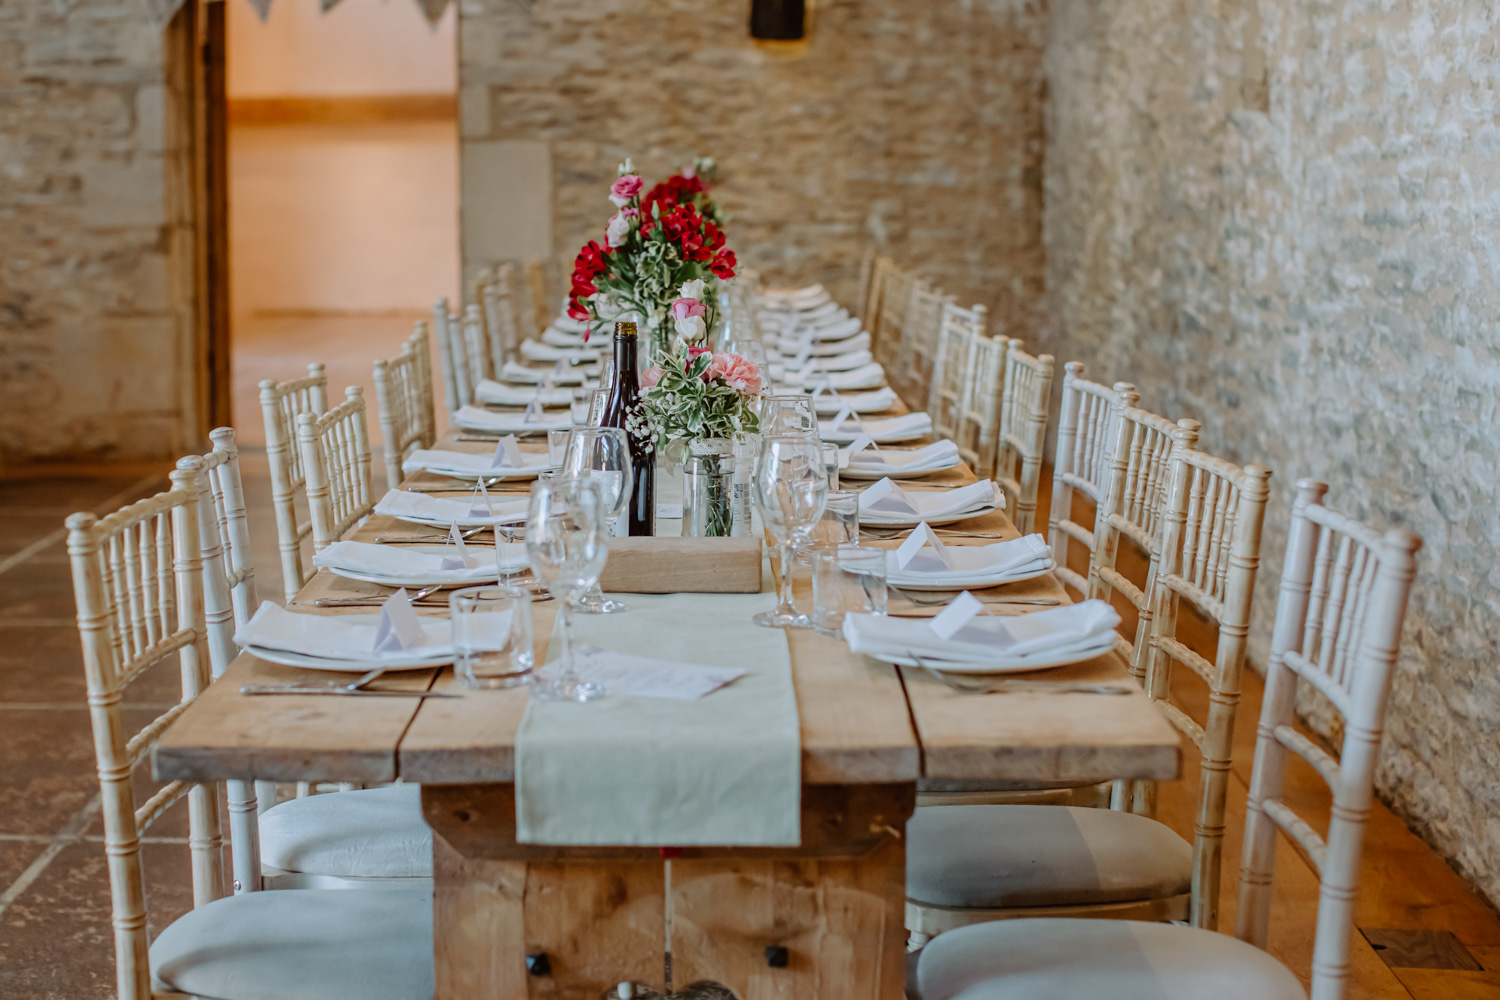 Beautifully decorated Oxleaze Barn wedding breakfast table 